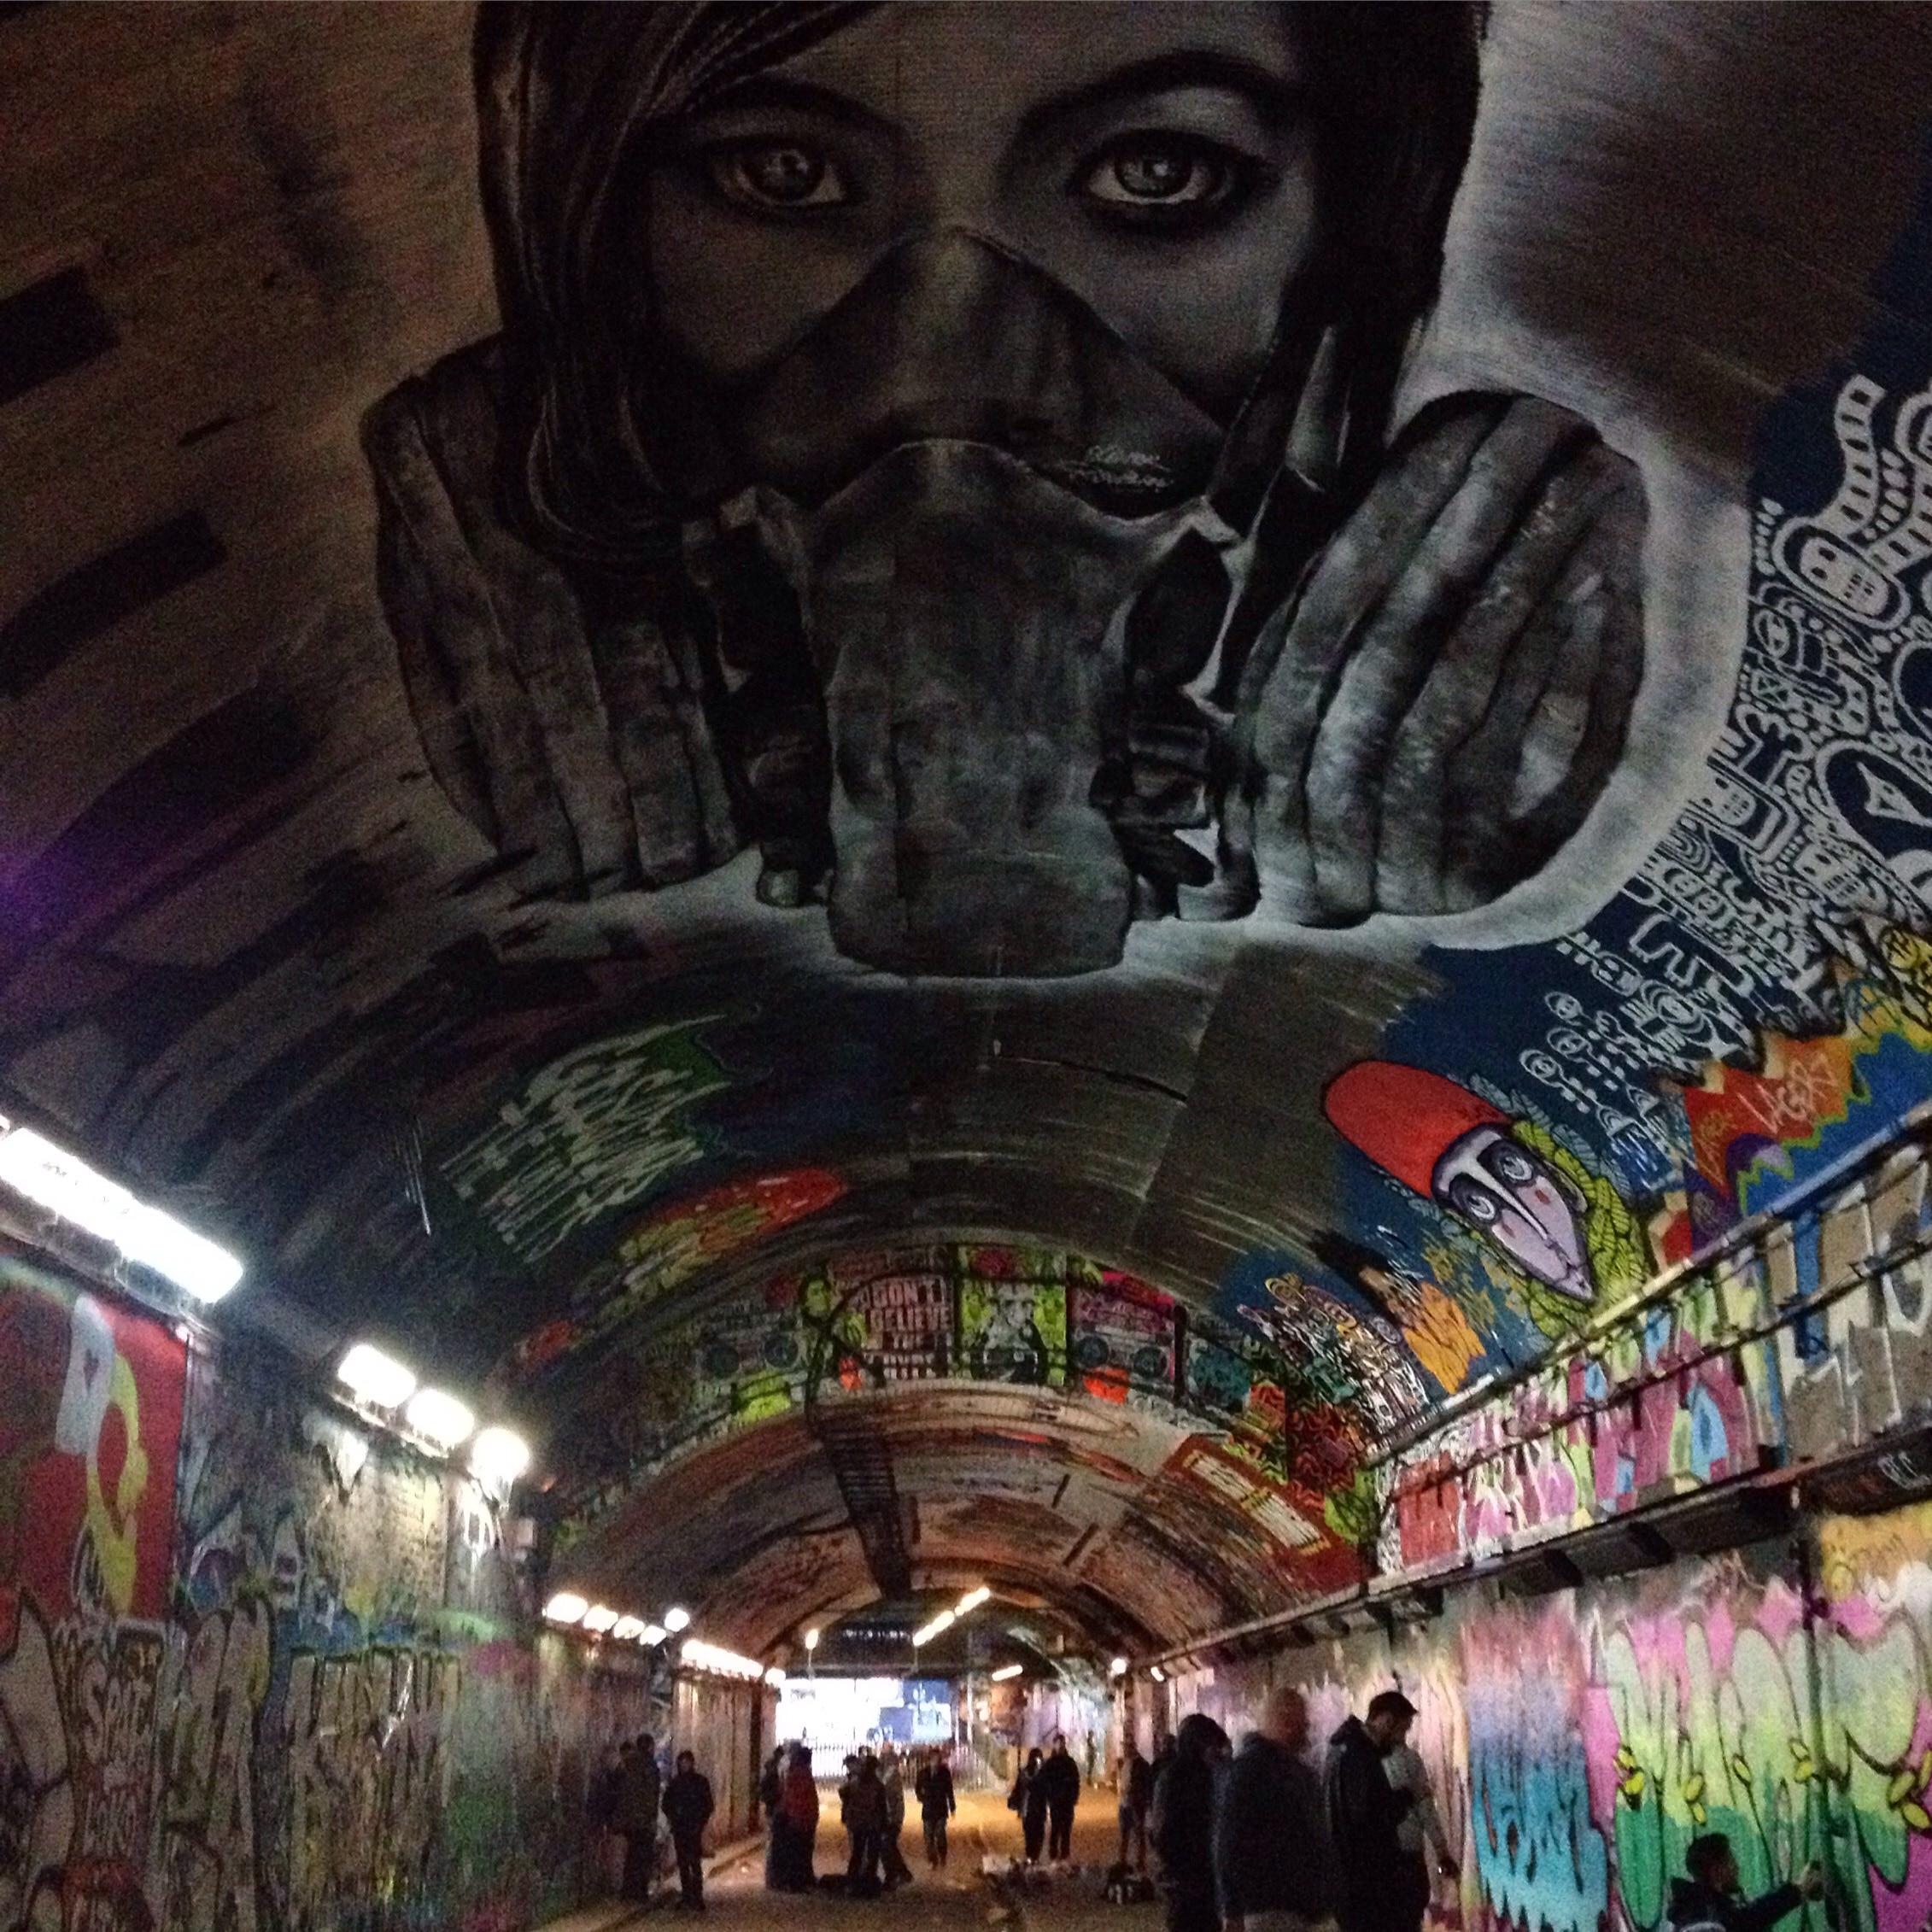 Graffiti Tunnel at the Vaults, off Leake Street.